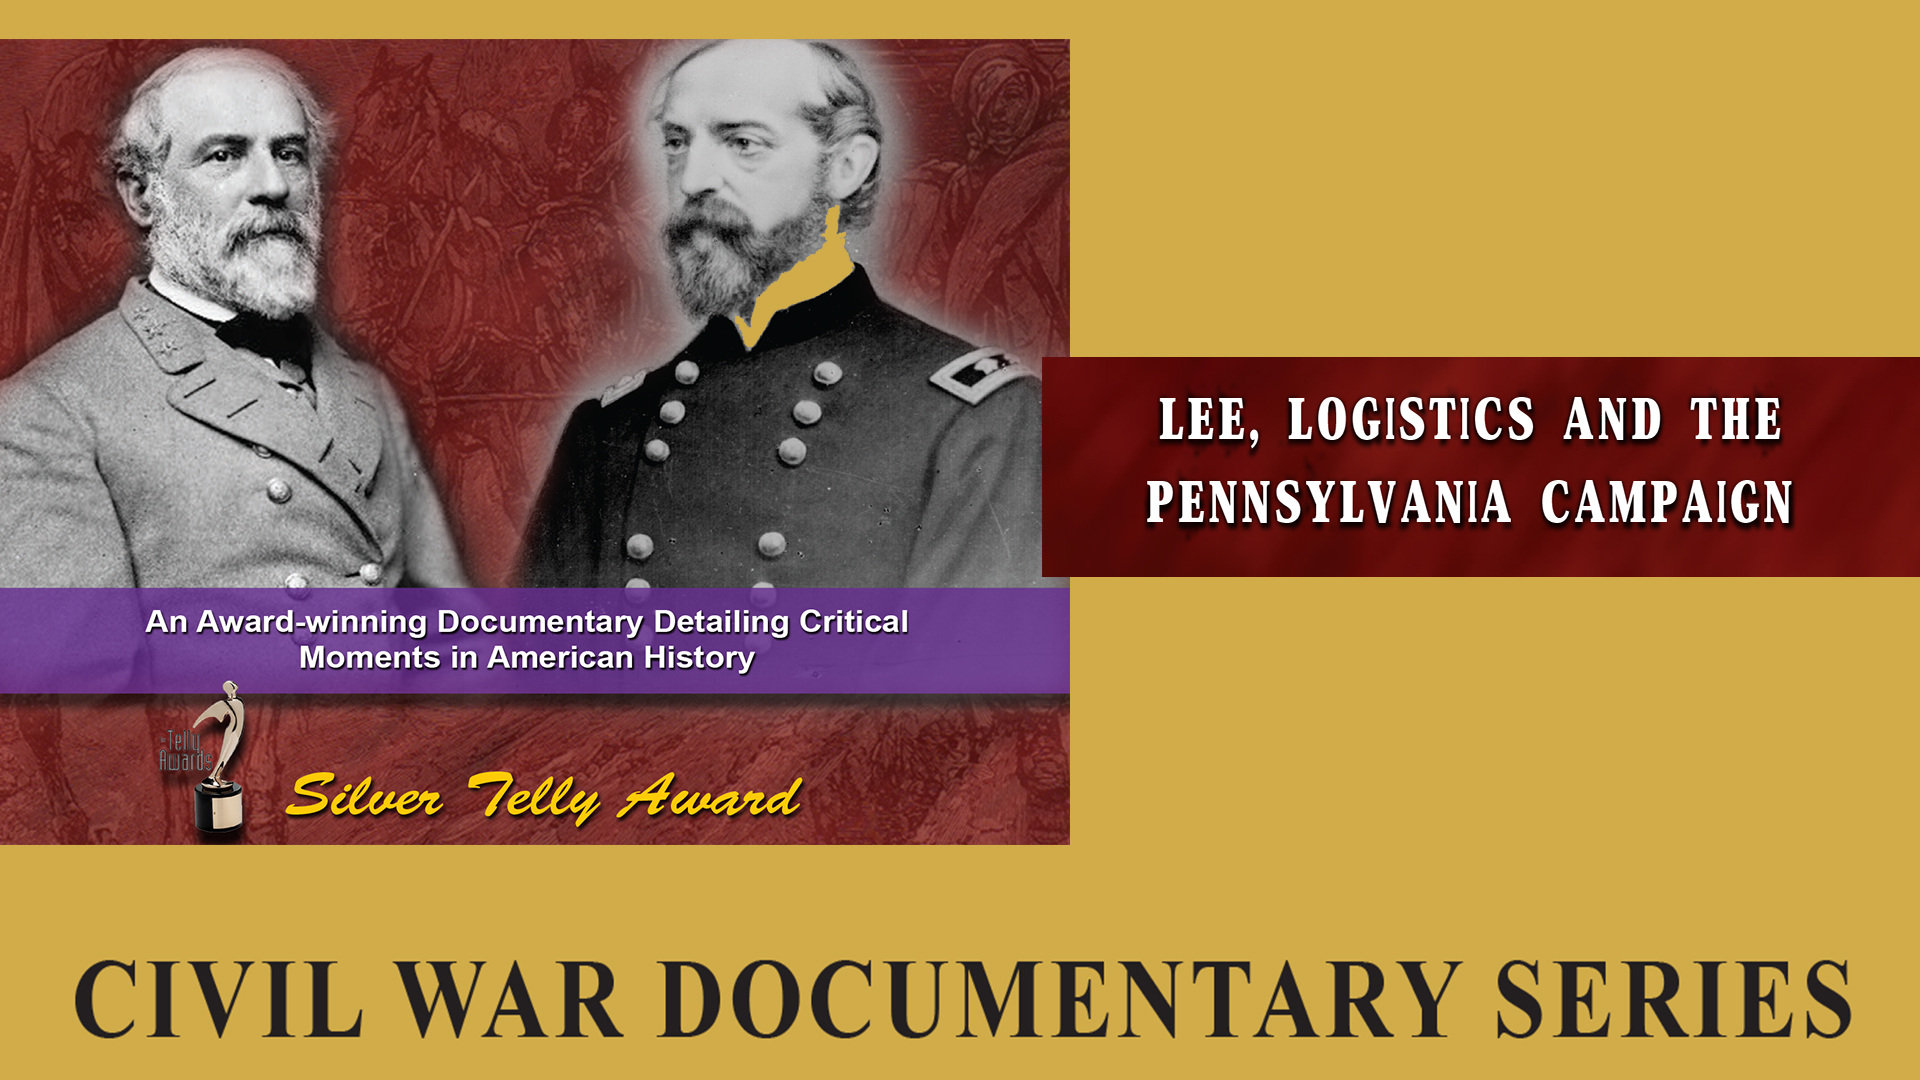 L4831 - Retreat From Gettysburg Lee, Logistics & The Pennsylvania Campaign